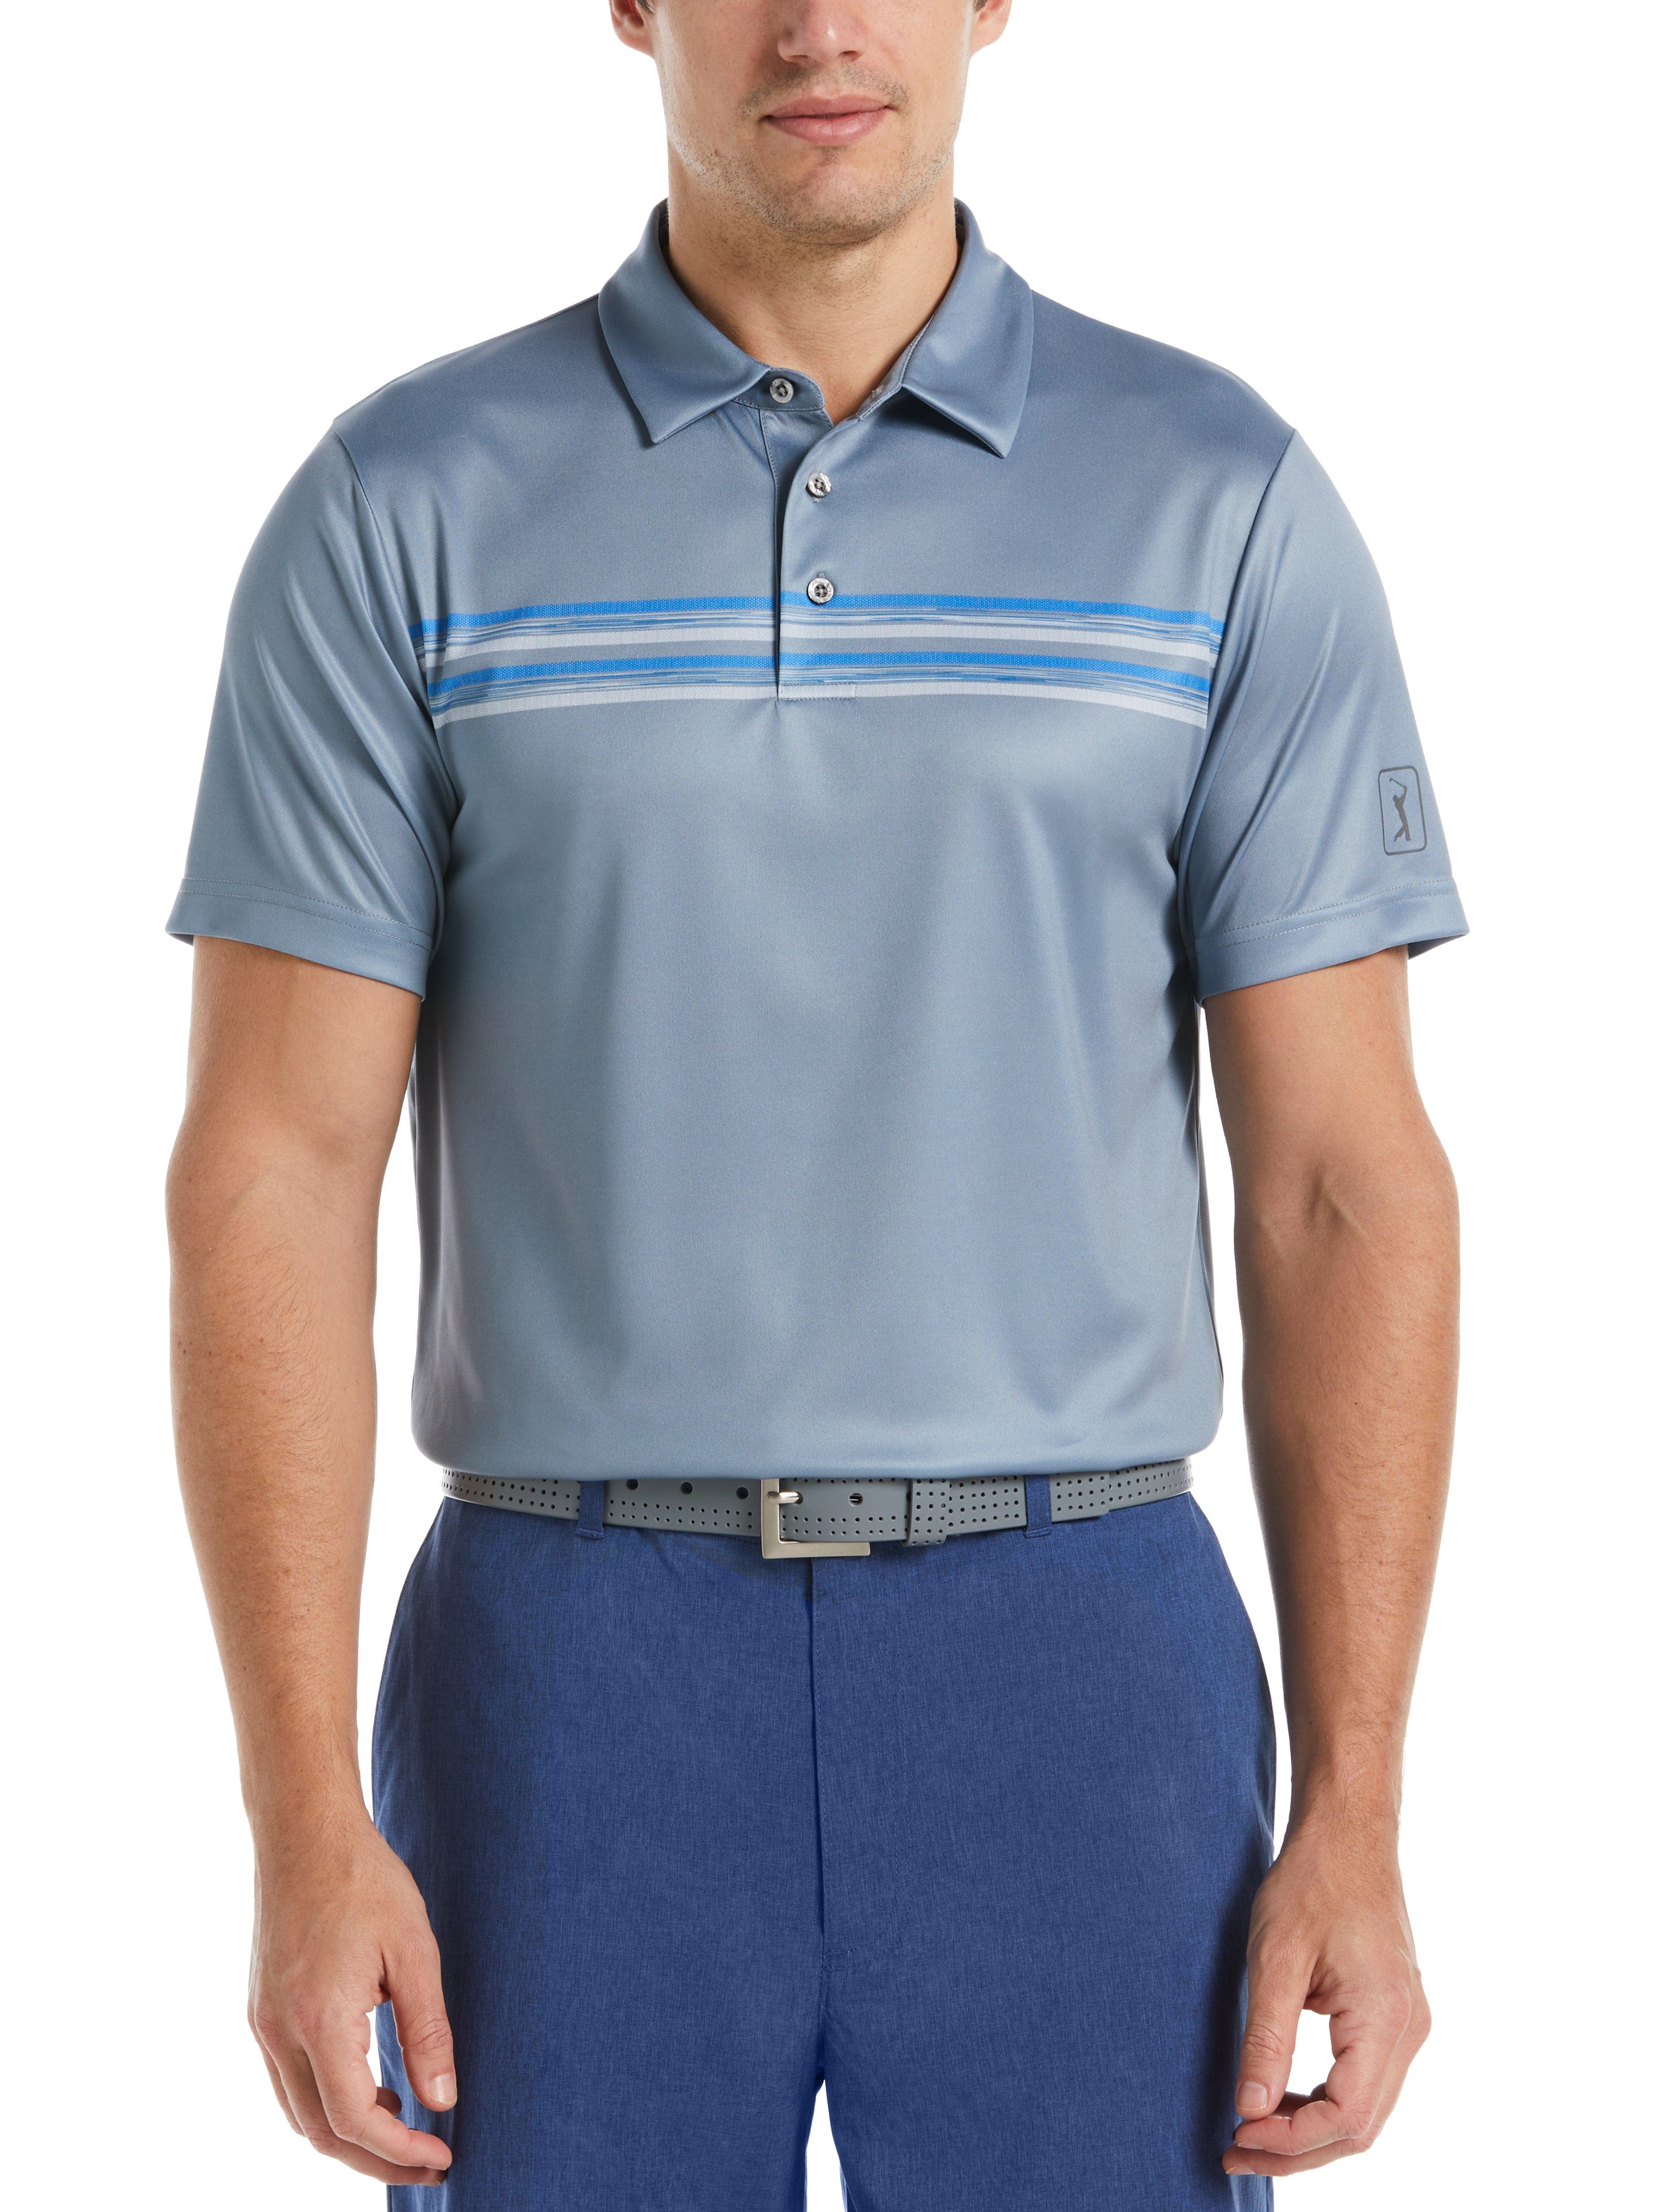 PGA TOUR Apparel Mens Chest Stripe Golf Polo Shirt, Size 2XL, Tradewinds Gray, 100% Polyester | Golf Apparel Shop